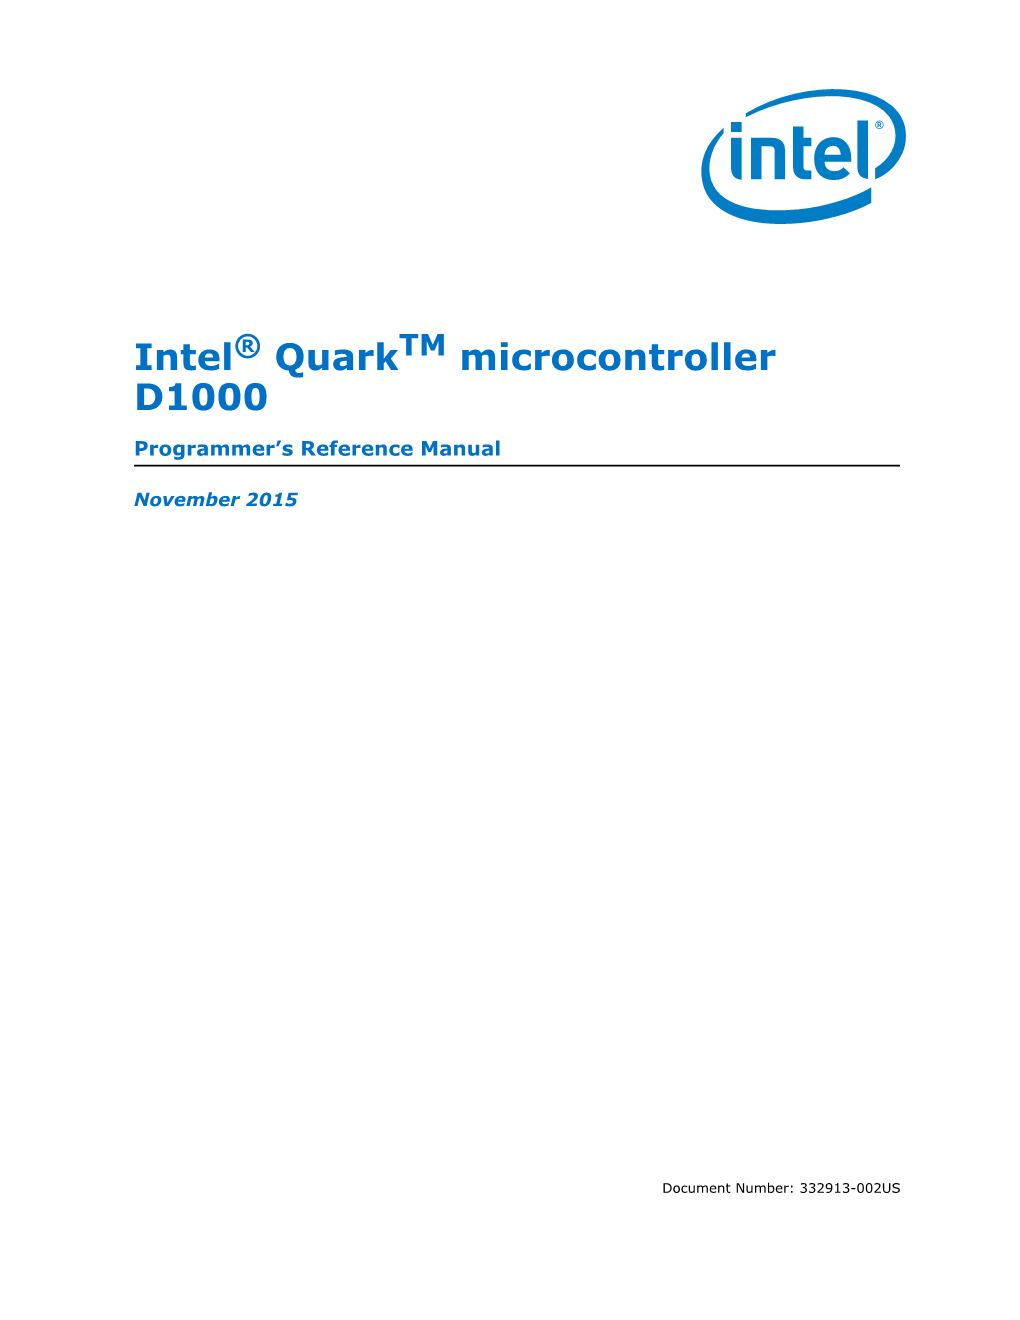 Intel Quark Microcontroller D1000 Programmer's Reference Manual